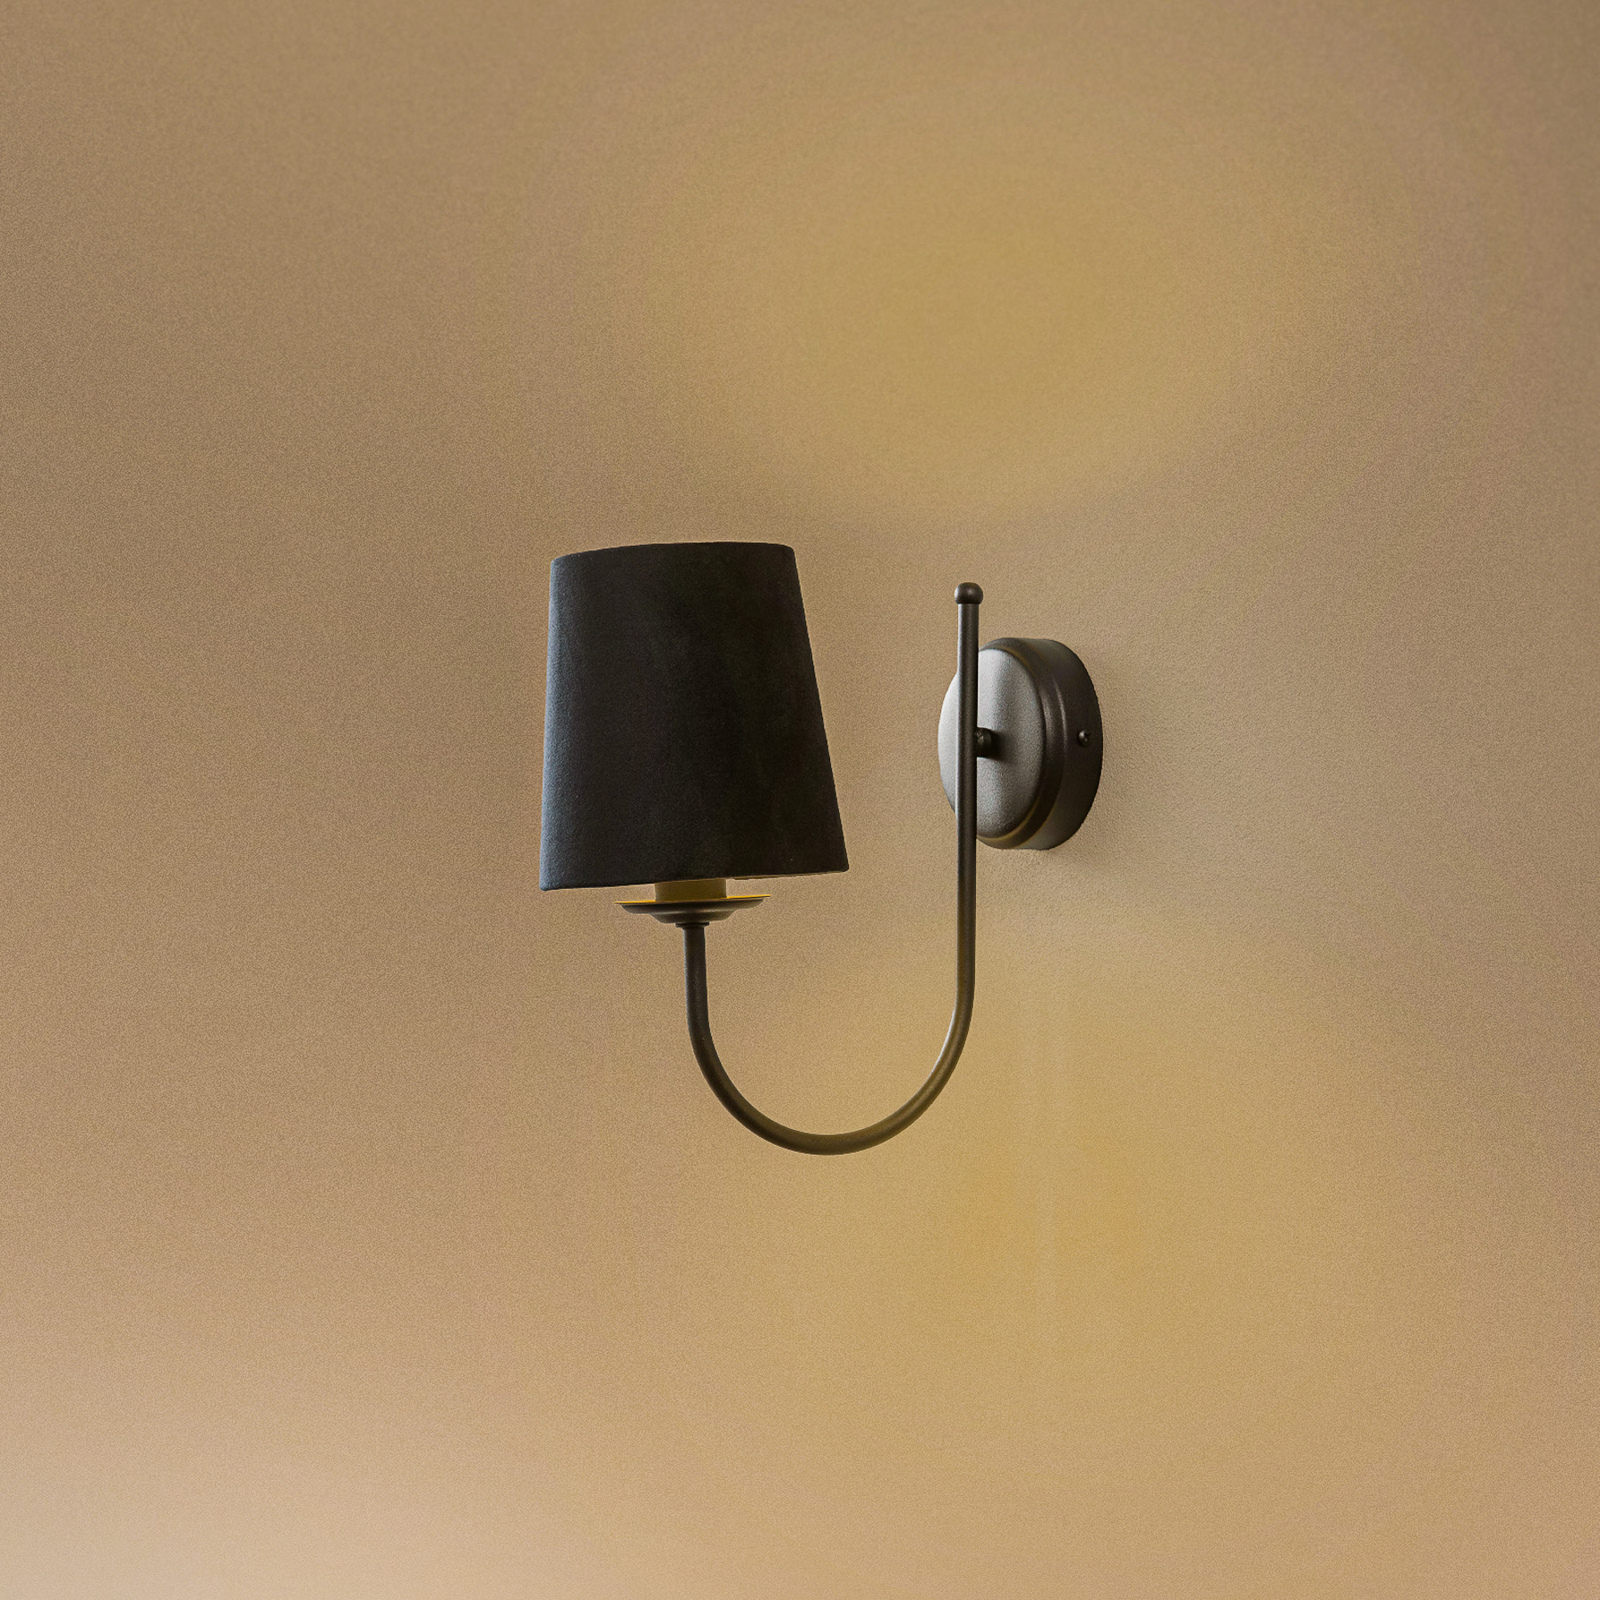 Bona wall light, one-bulb, black